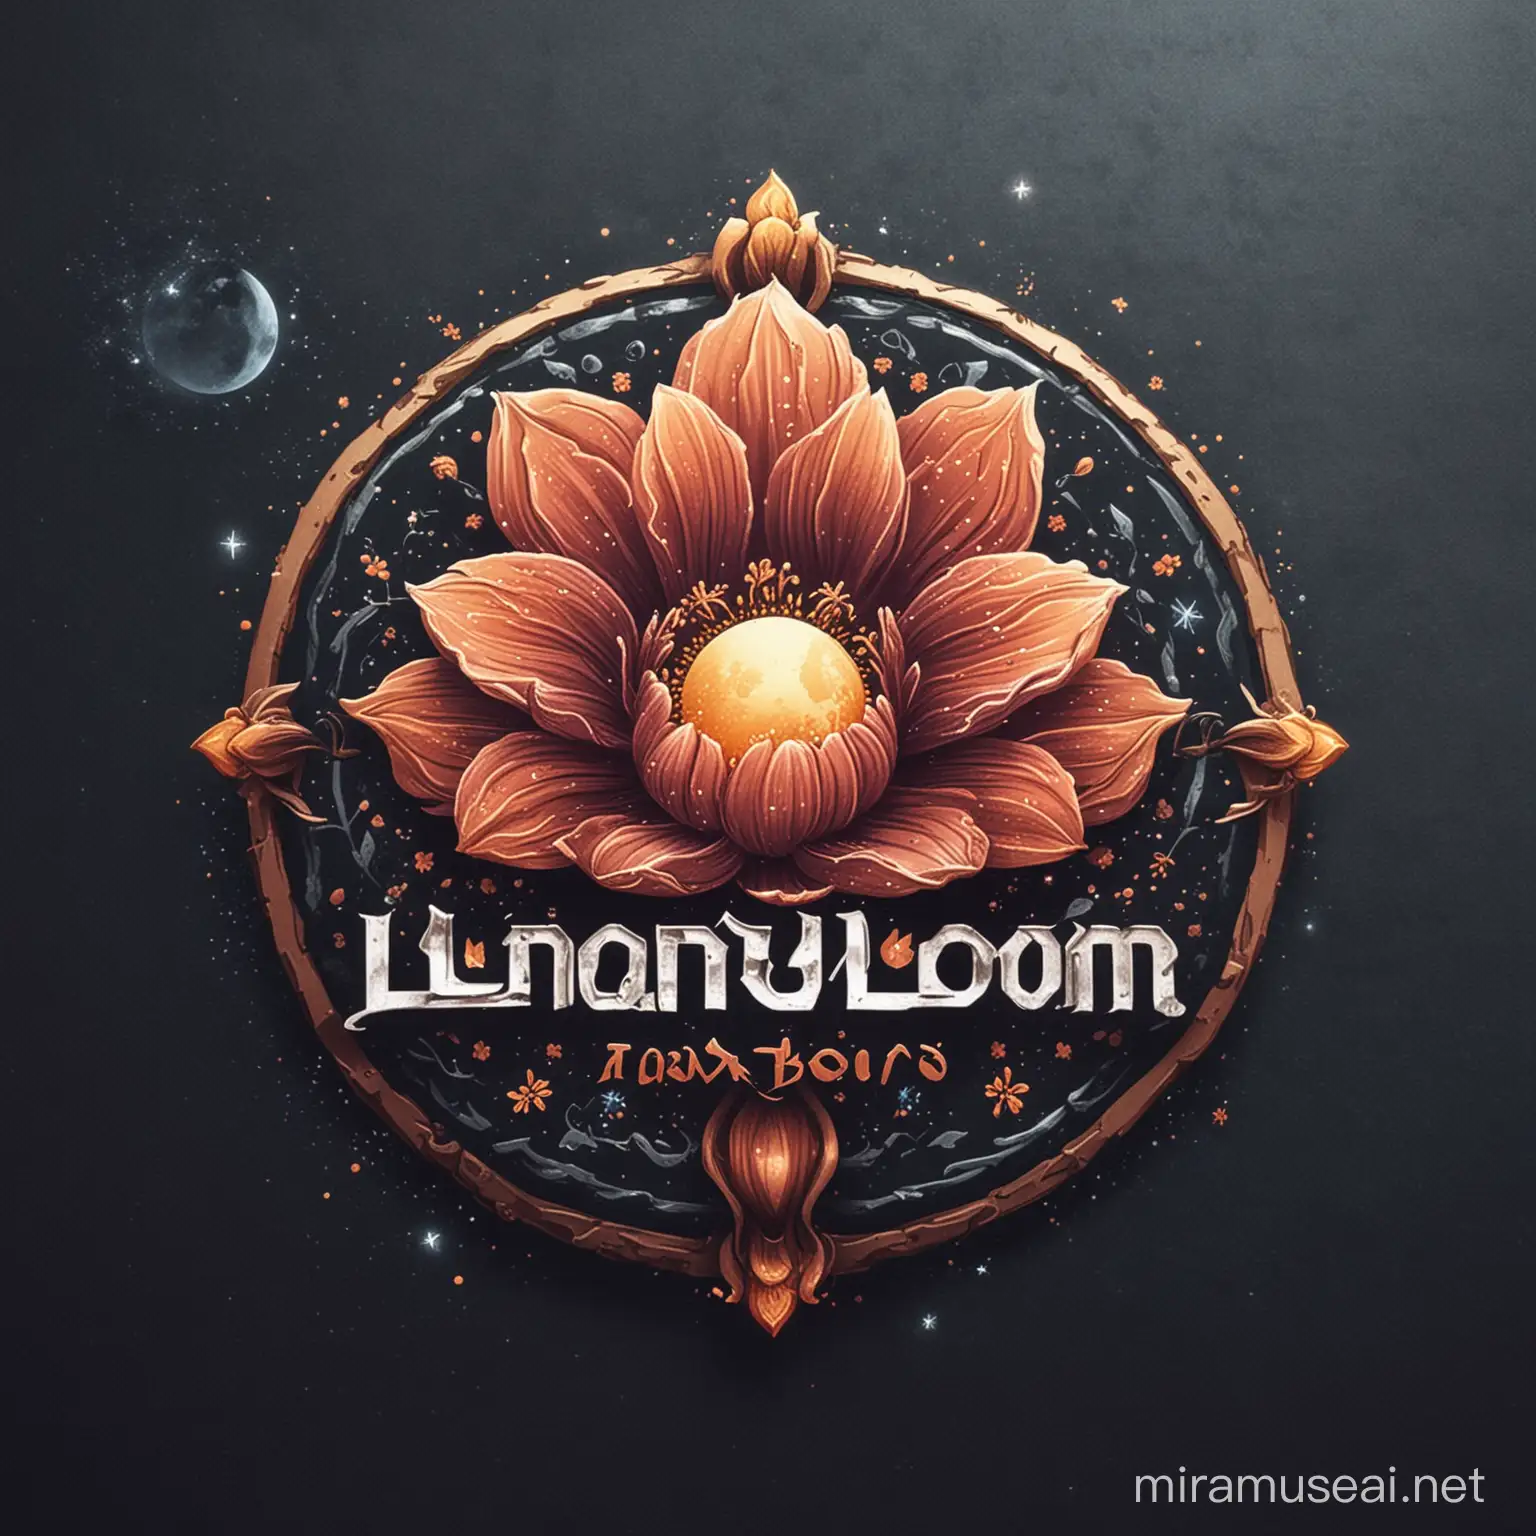 Lunar Bloom Team Logo Design Celestial Elegance and Natural Harmony